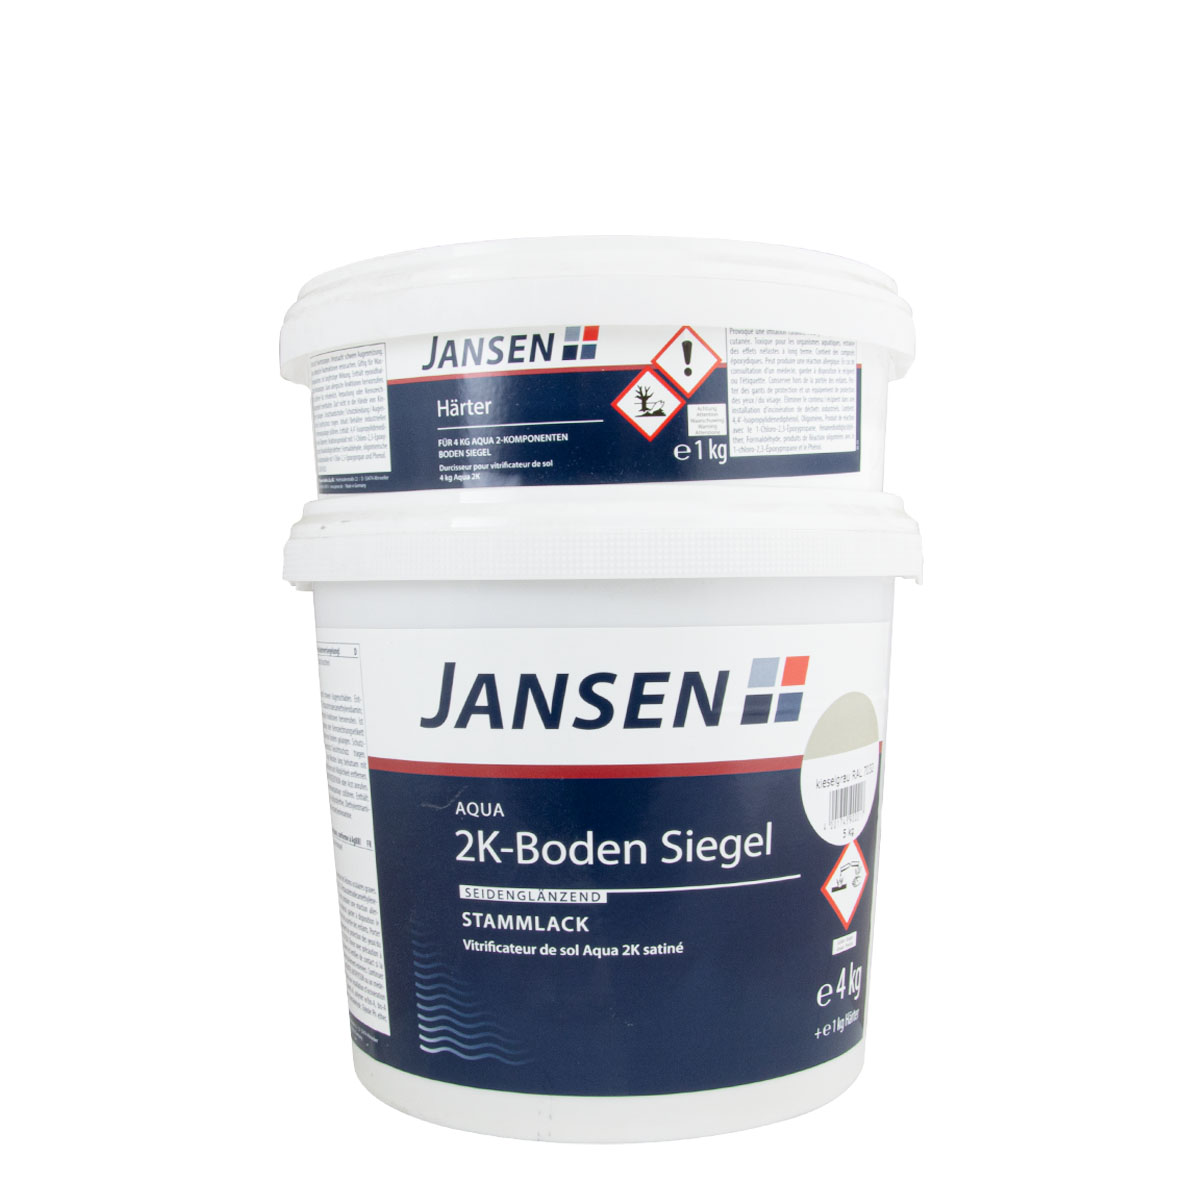 Jansen Aqua 2K-Boden Siegel 5kg incl. Härter Kieselgrau RAL 7032